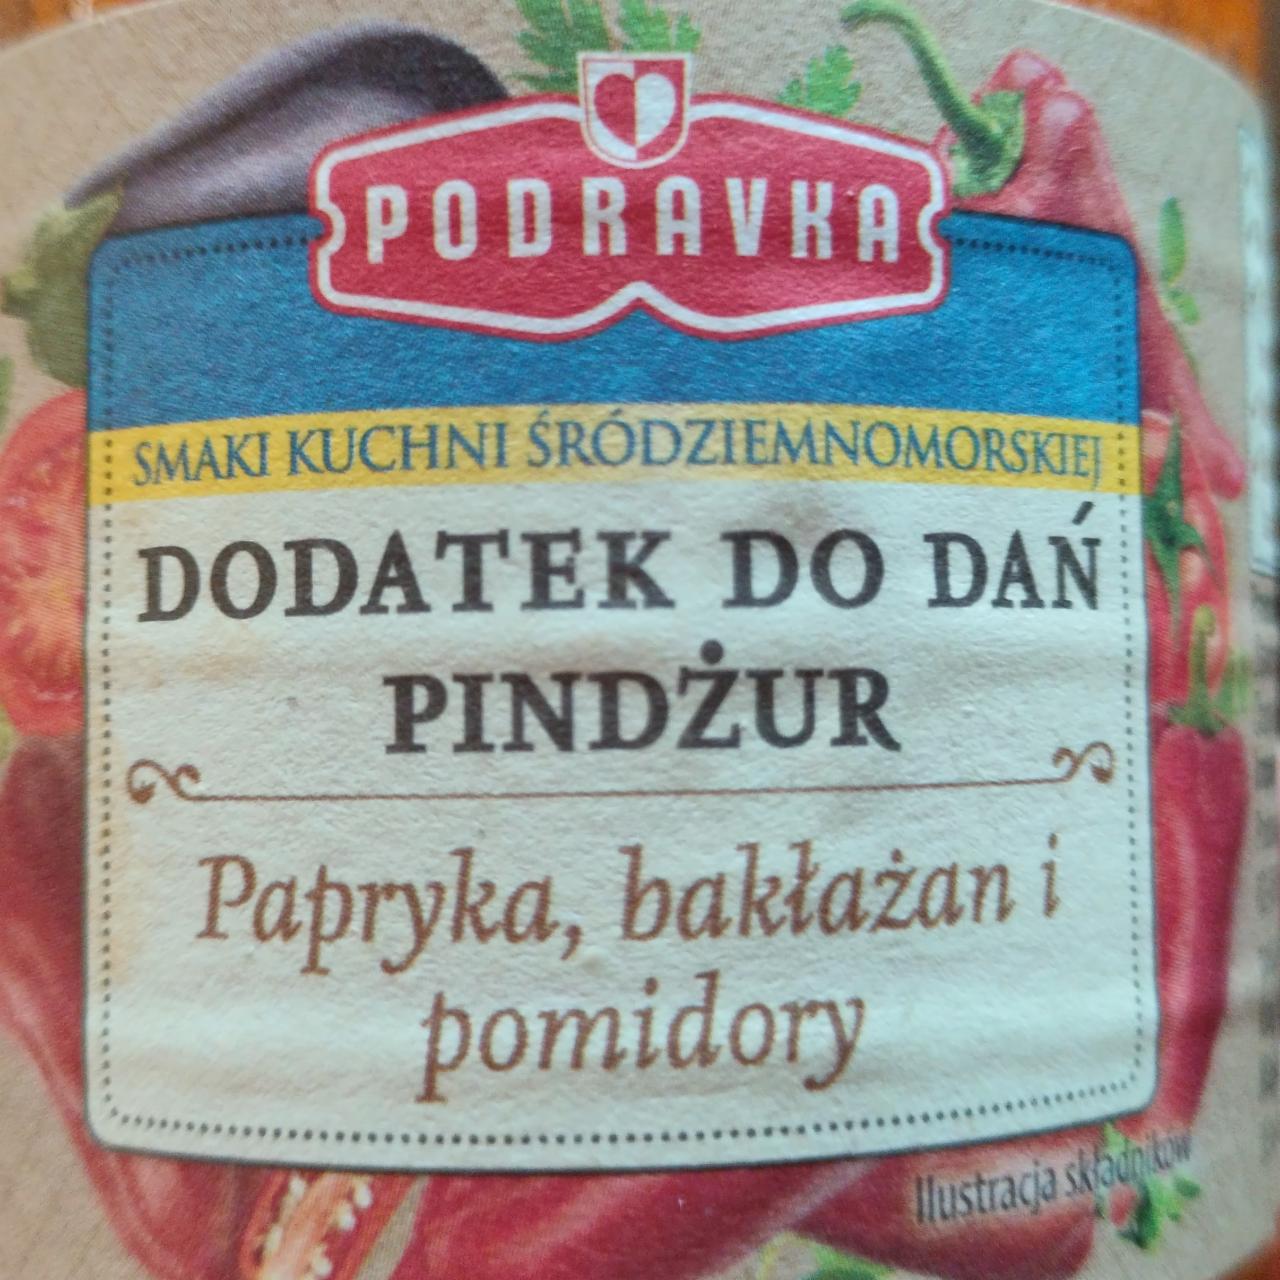 Fotografie - Dodatek do dań pindzur Papryka, baklazan i pomidory Podravka